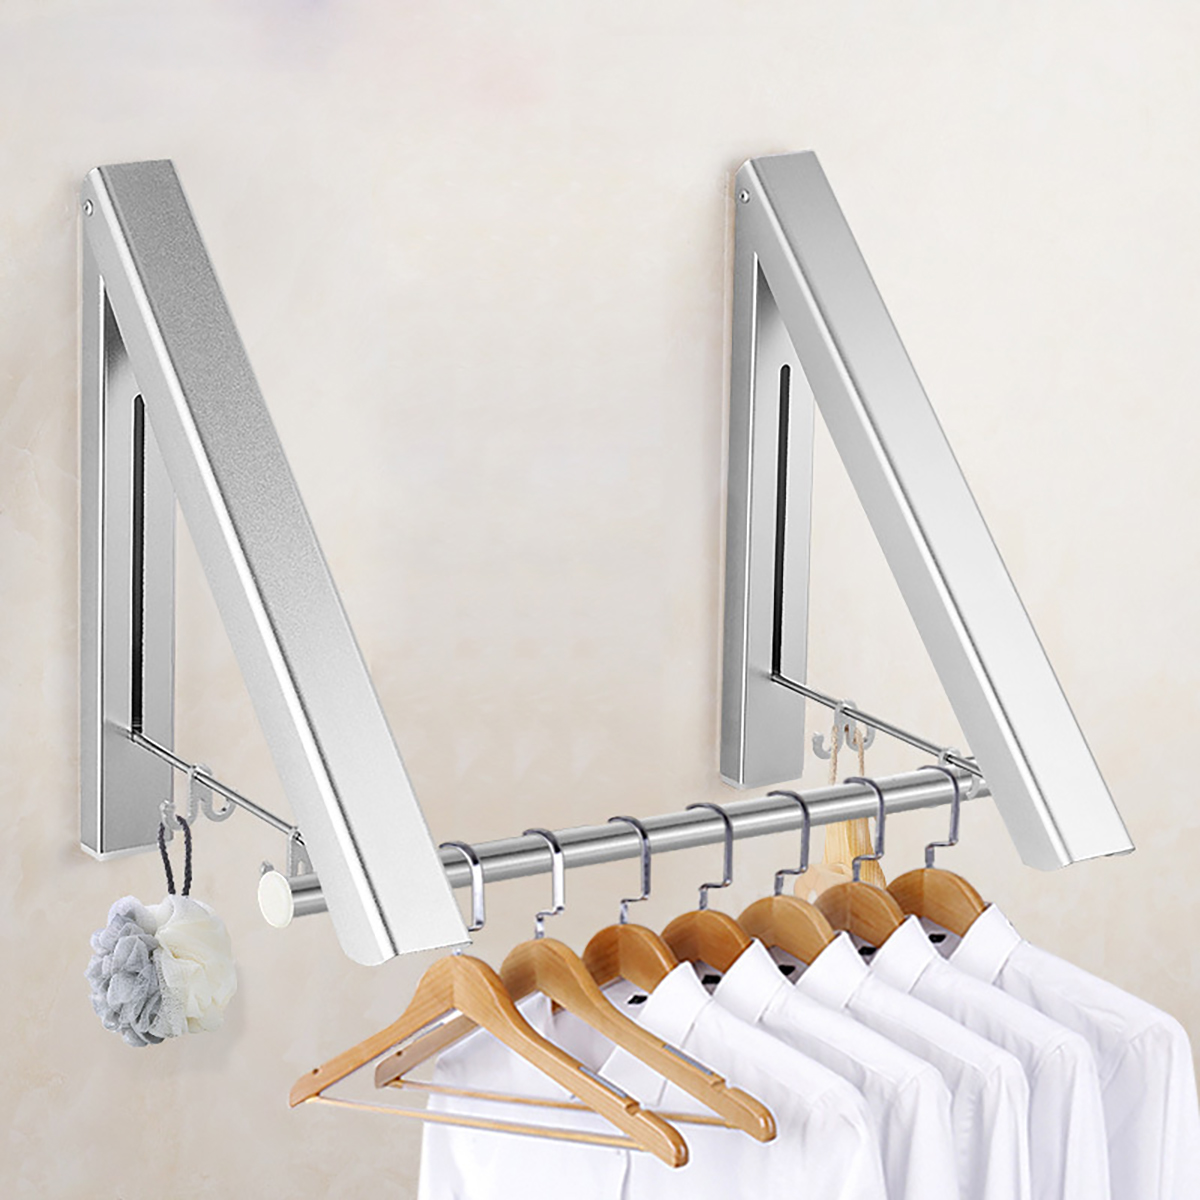 Creative Aluminum Folding Wall Hanger Hooks Rack Holder Clothes Towel Coat Rack 